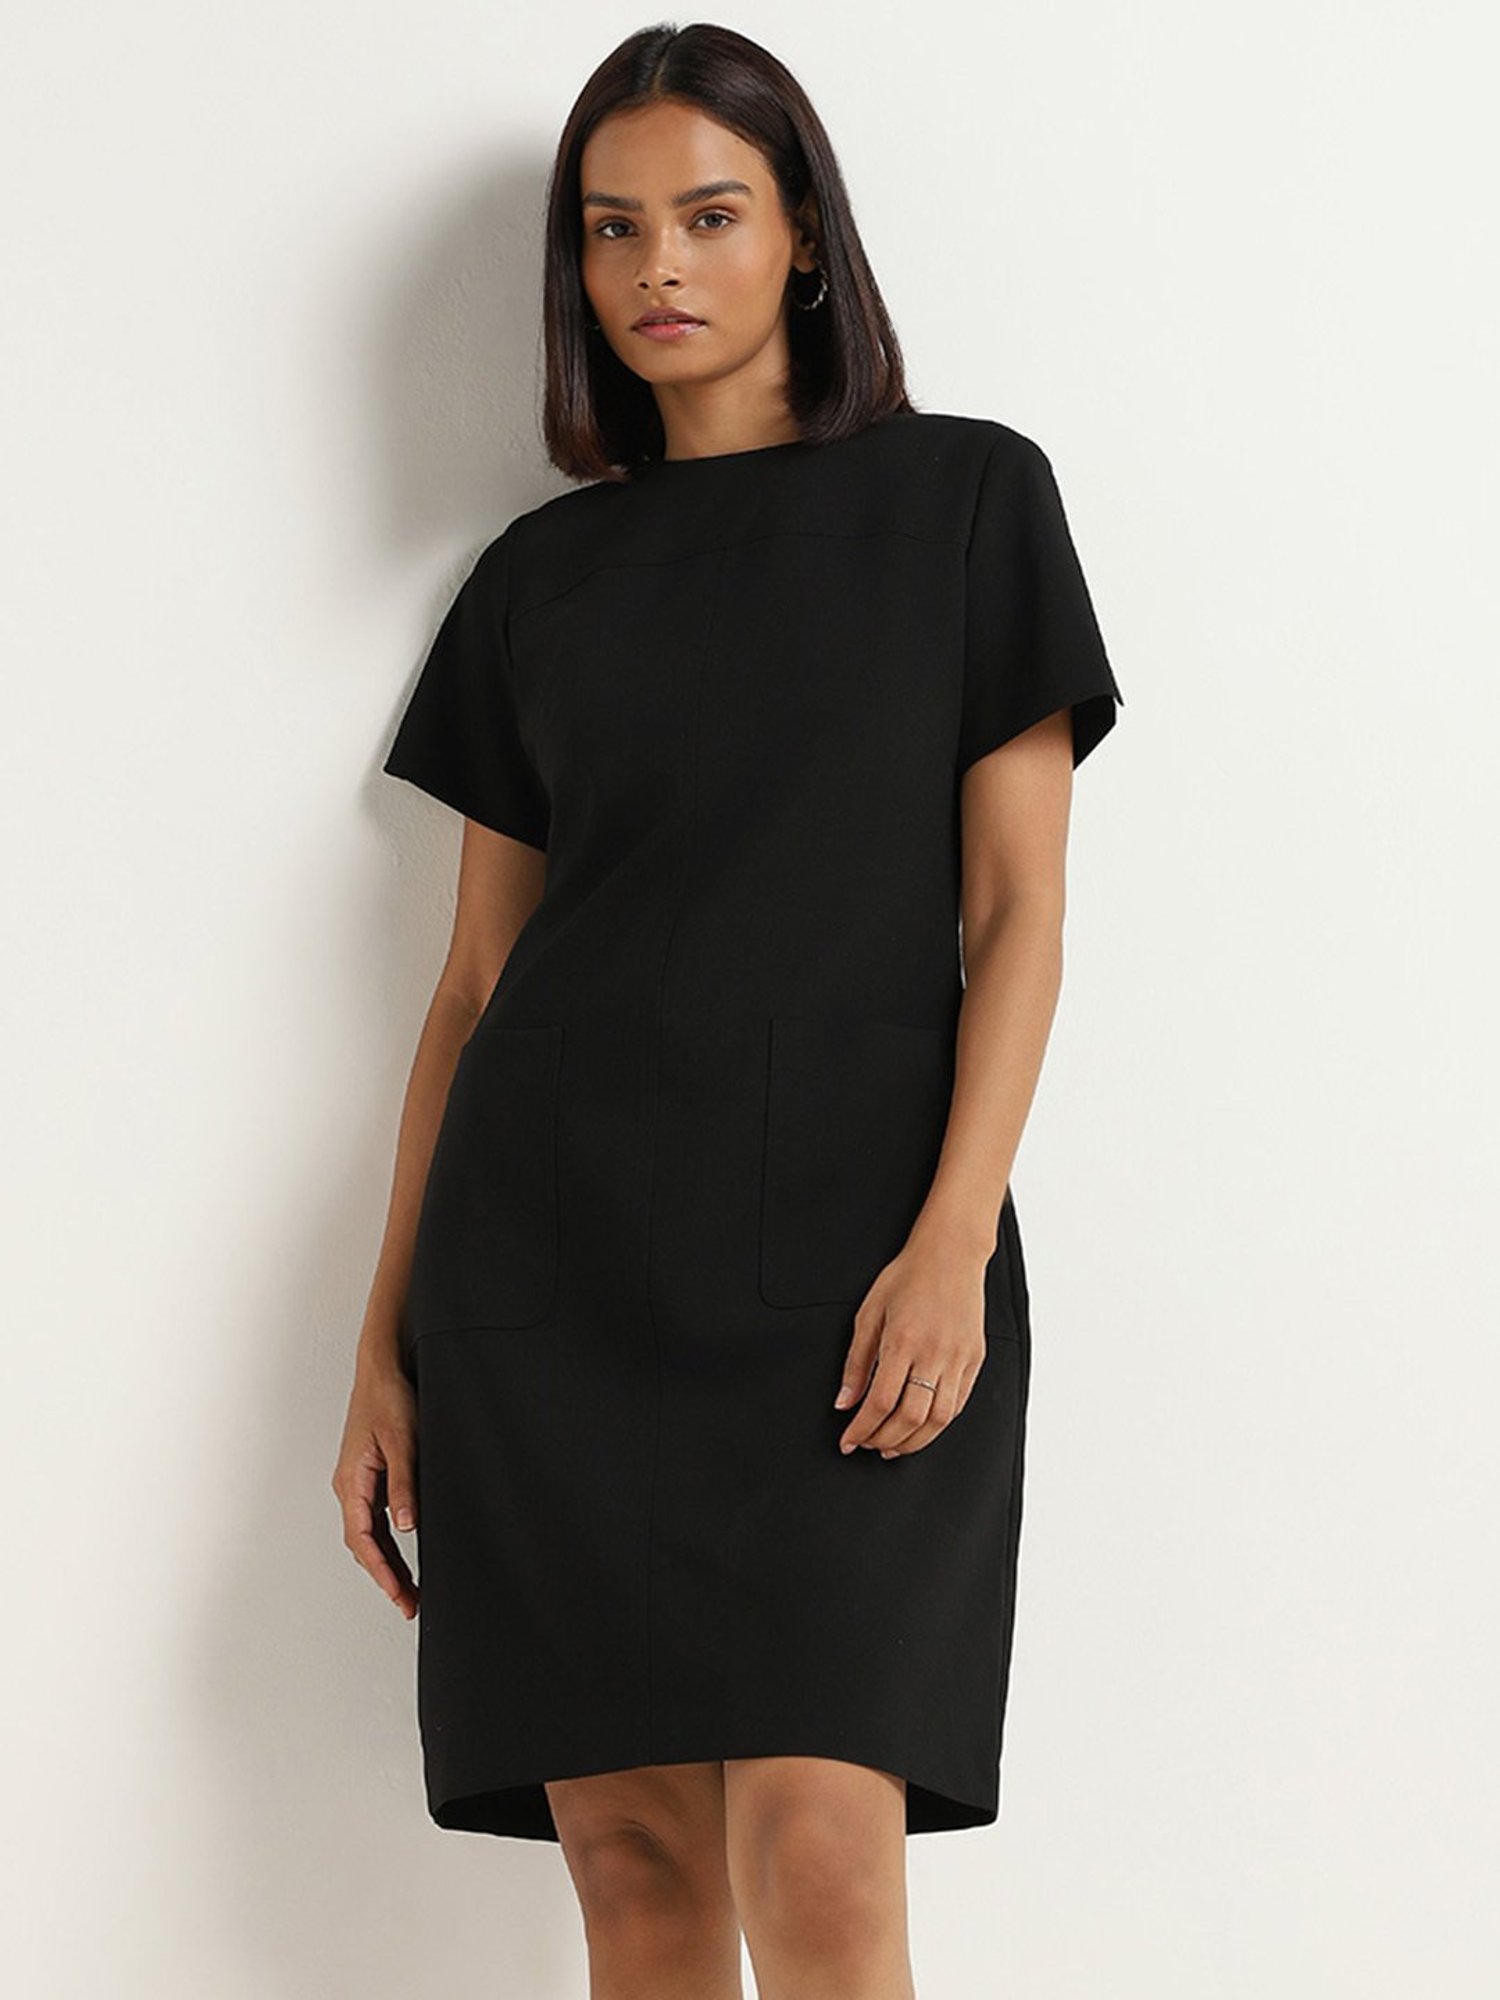 Designer Cut Classy Sleeveless Black Bodycon Party Dress – Stylesplash